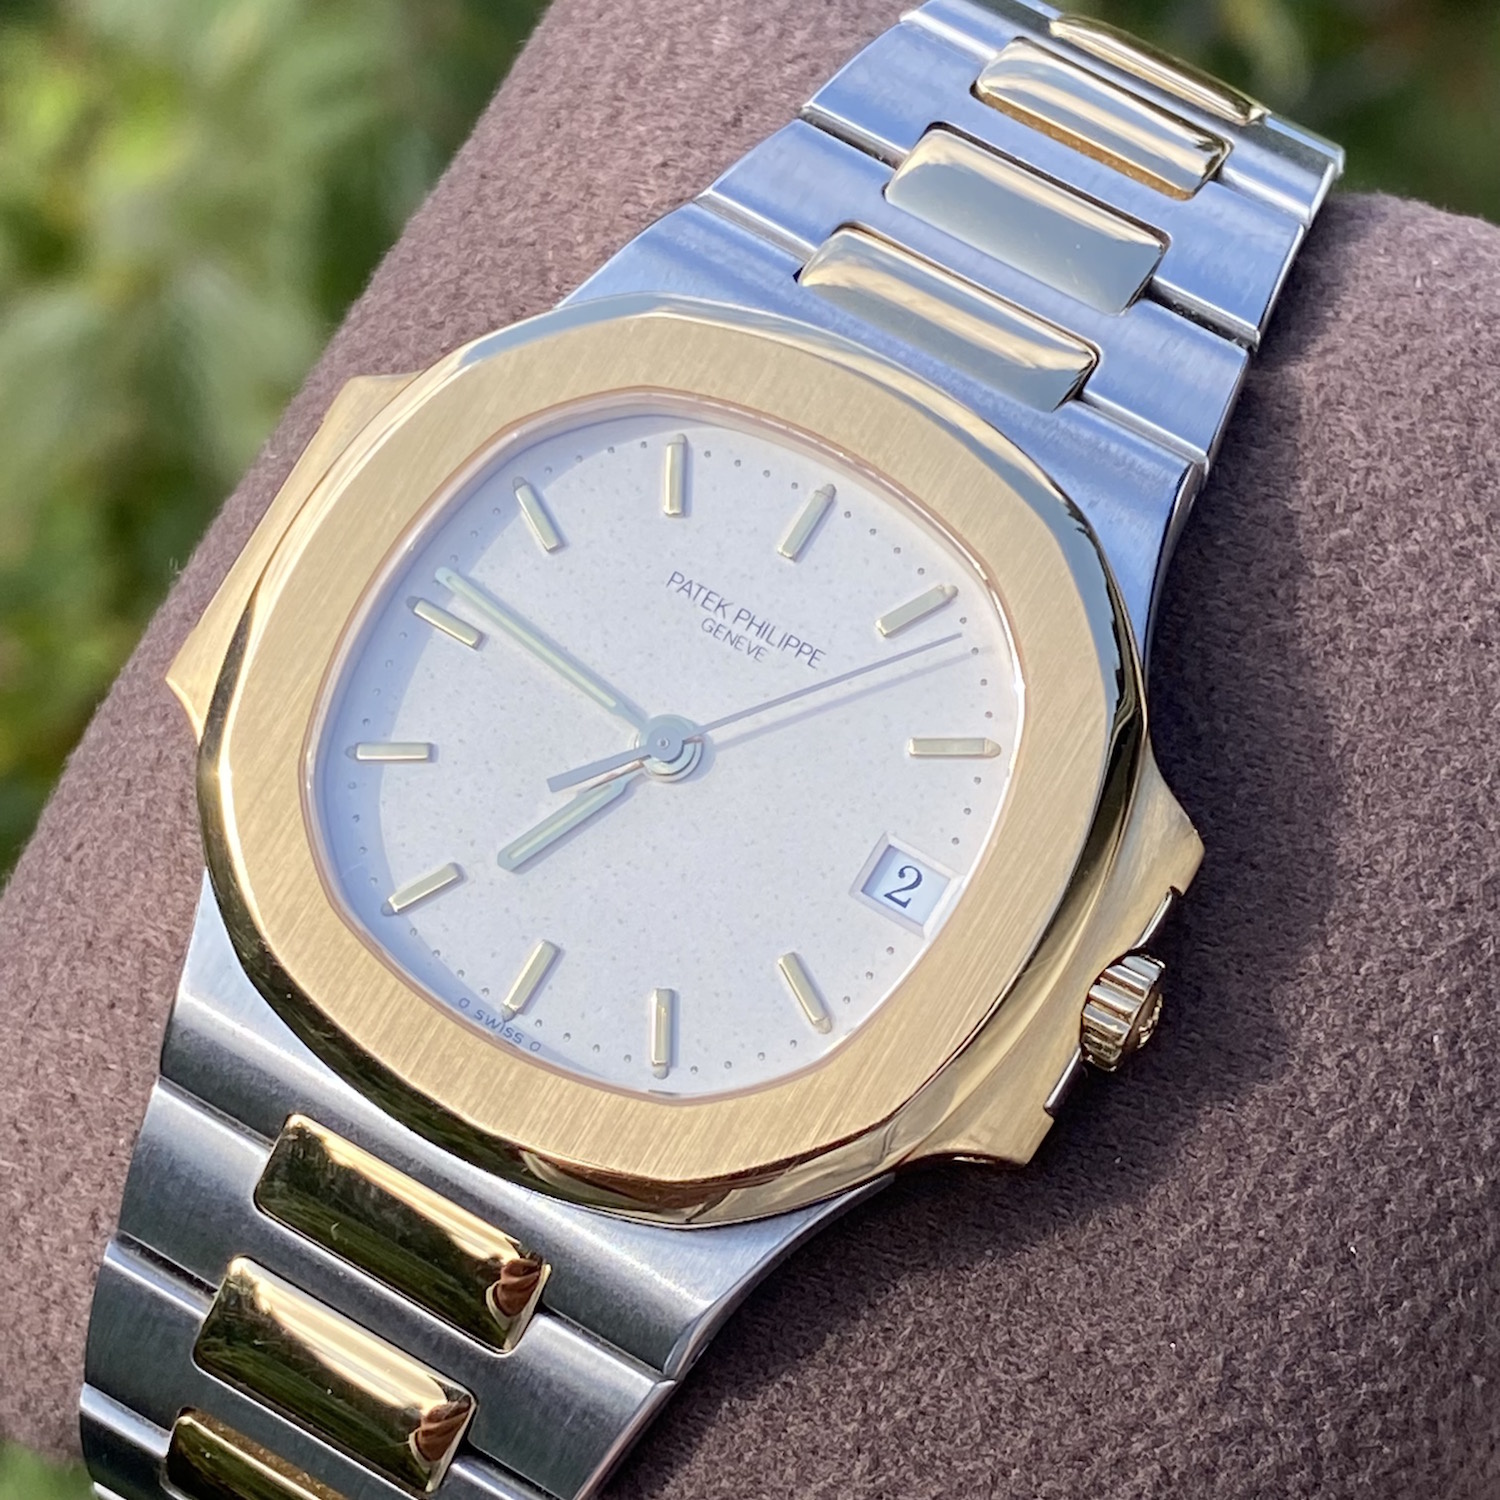 Nautilus watches Ref.3800/1 buy sell I Chrono World 